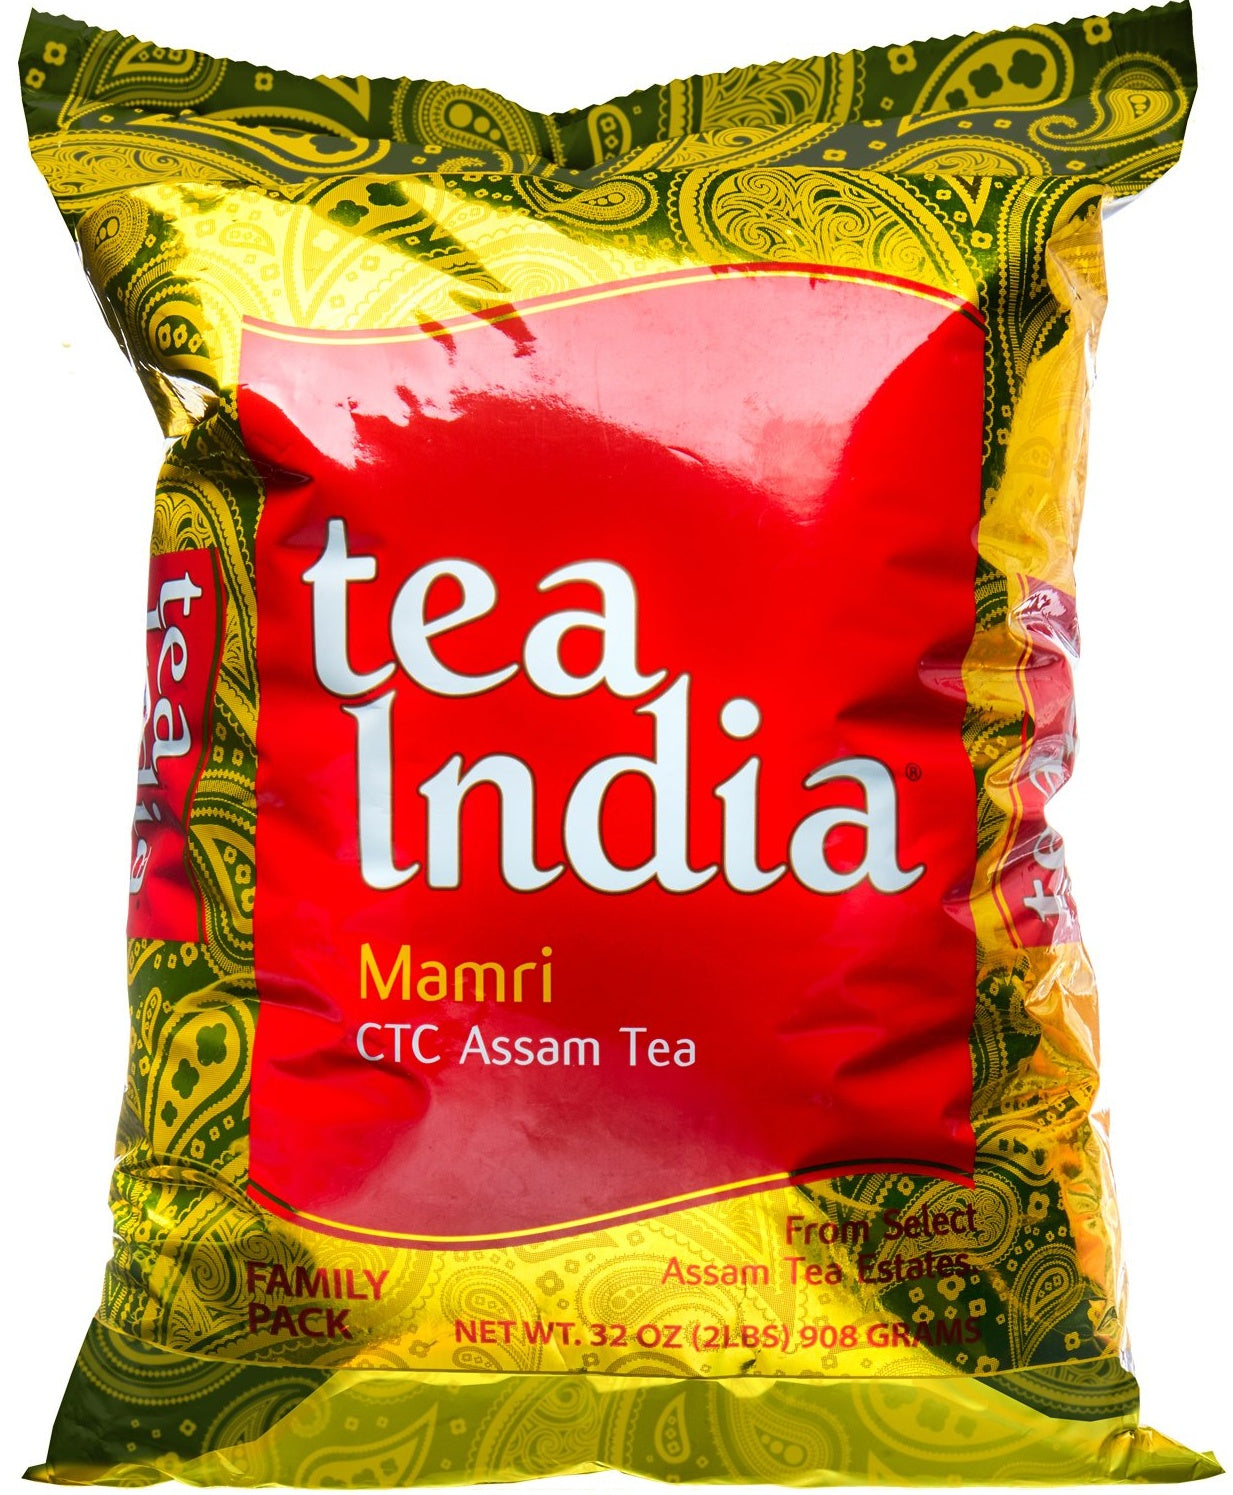 Mamri CTC Assam Tea